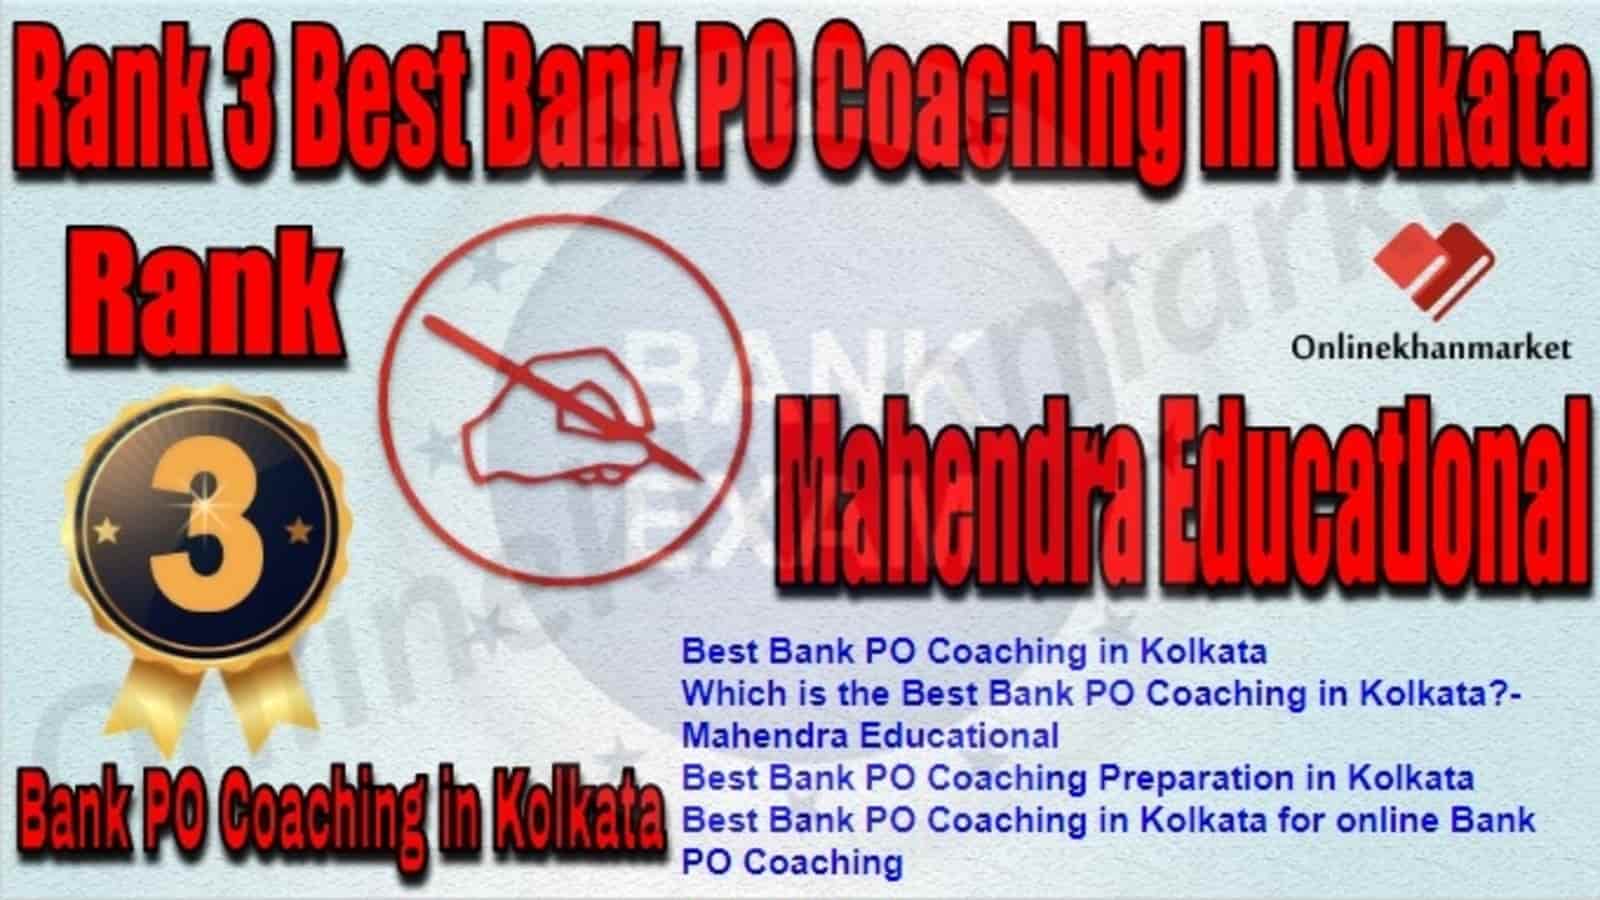 Rank 3 Best Bank PO Coaching in Kolkata